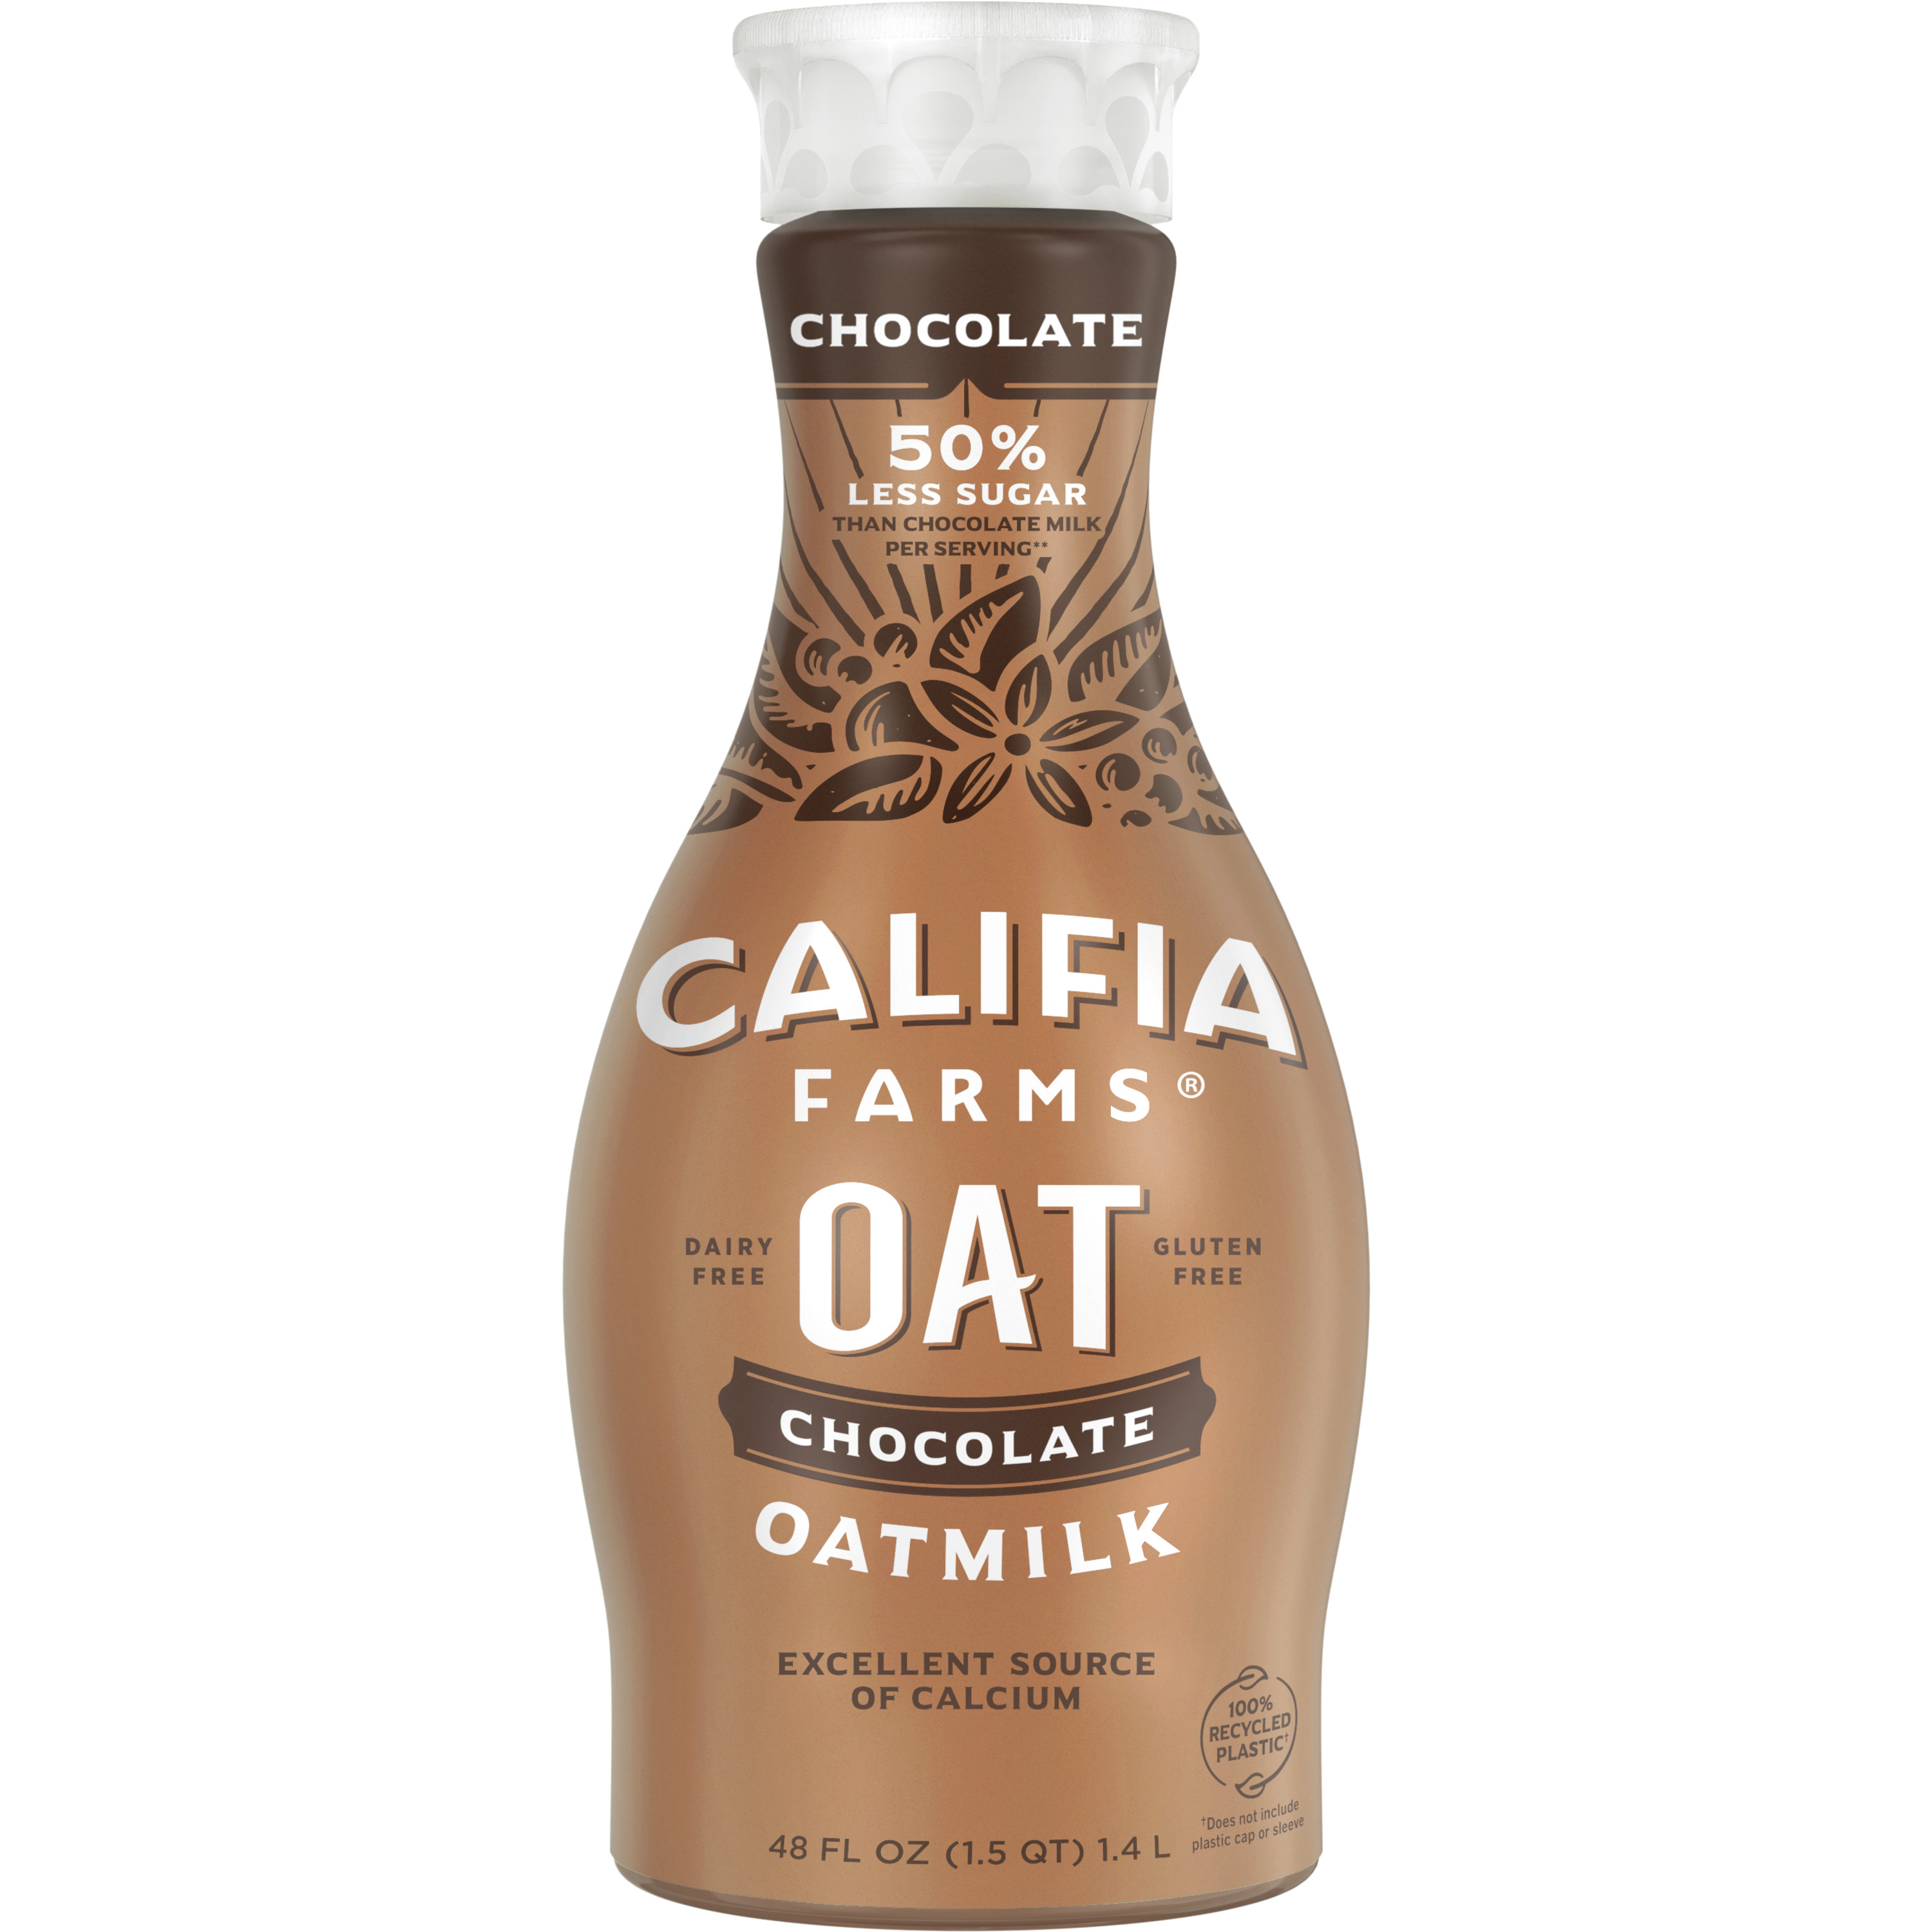 Califia Farms Oatmilk - Chocolate 6 units per case 48.0 oz